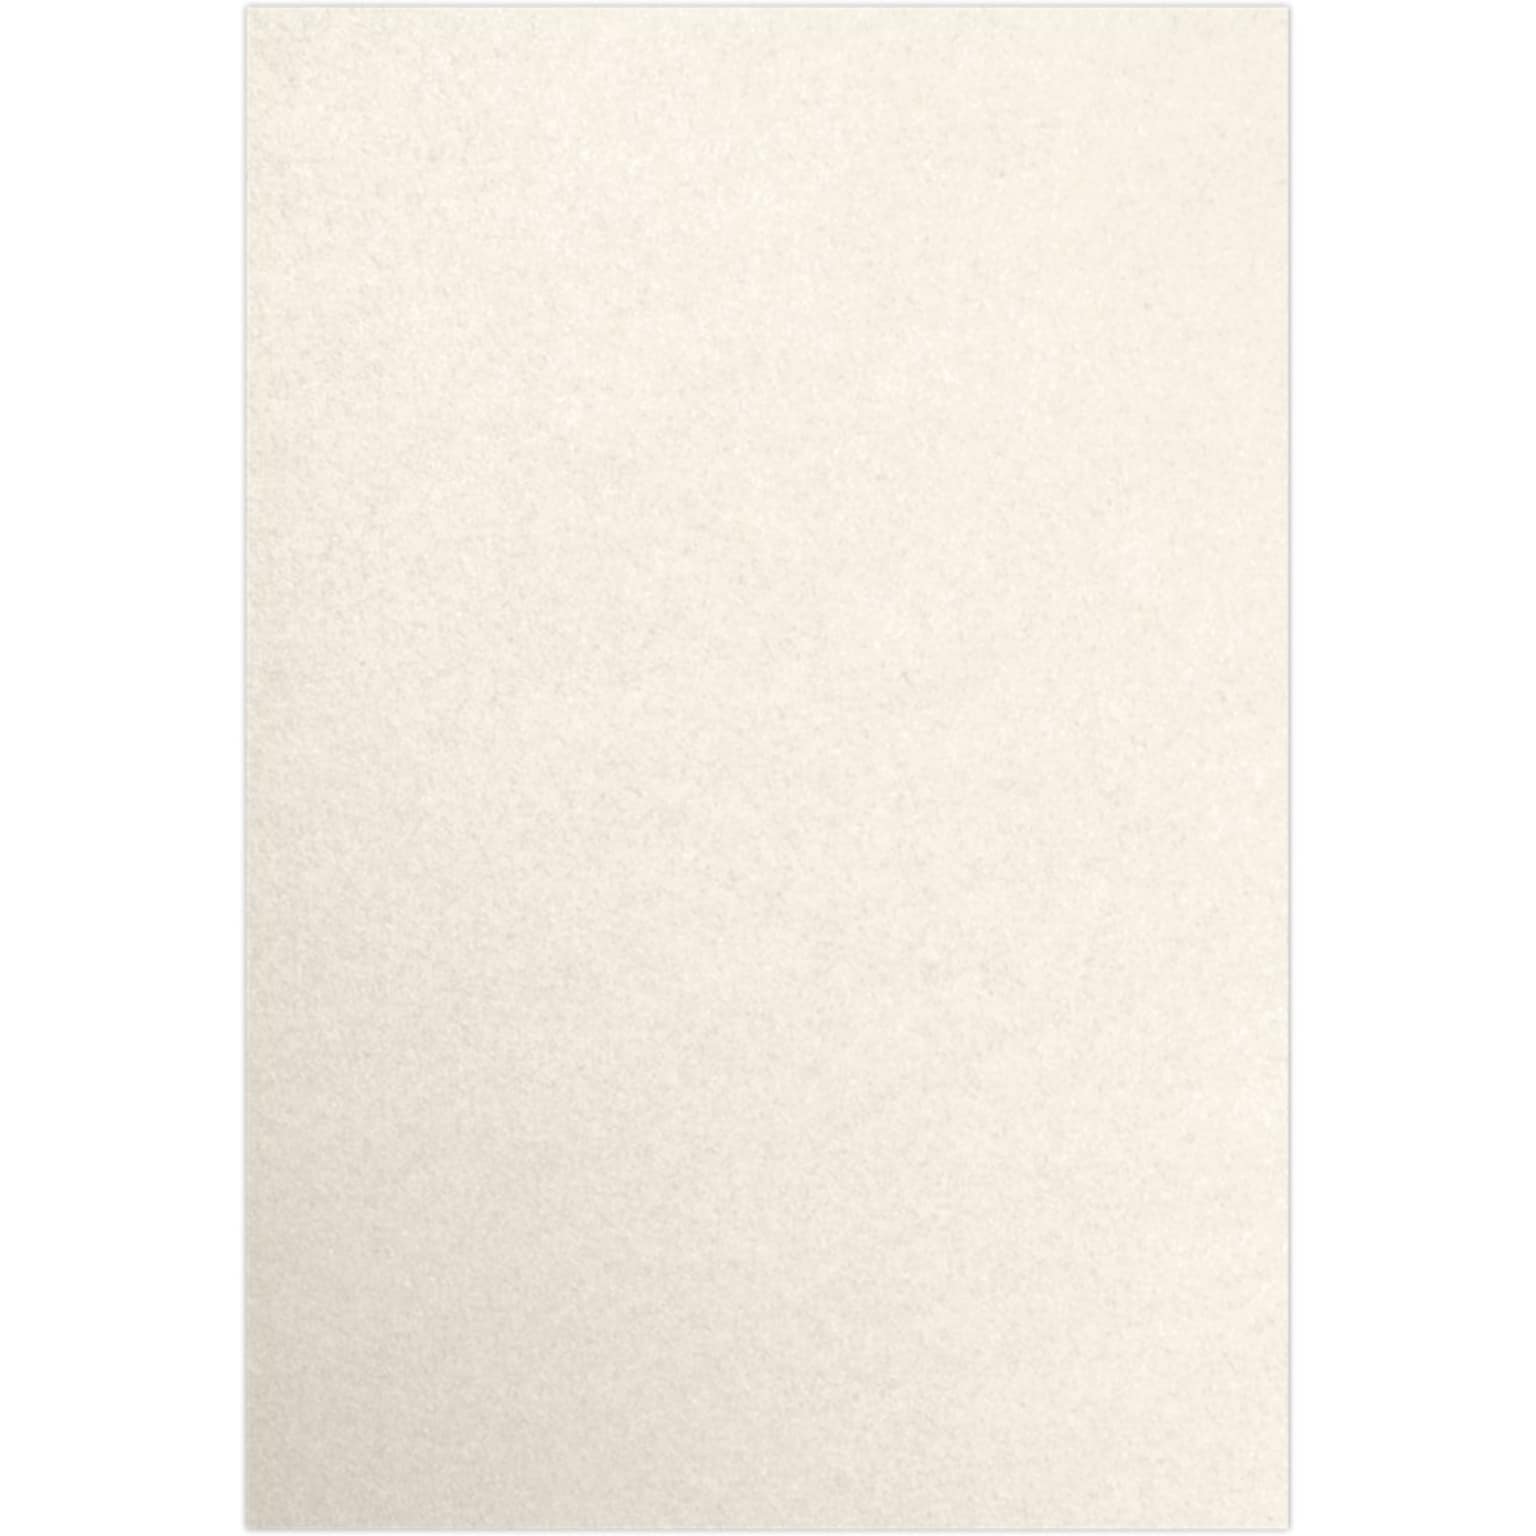 JAM Paper 13 x 19 Color Multipurpose Paper, 80 lbs., Champagne Metallic, 50 Sheets/Ream (1319-P-CHAM-50)